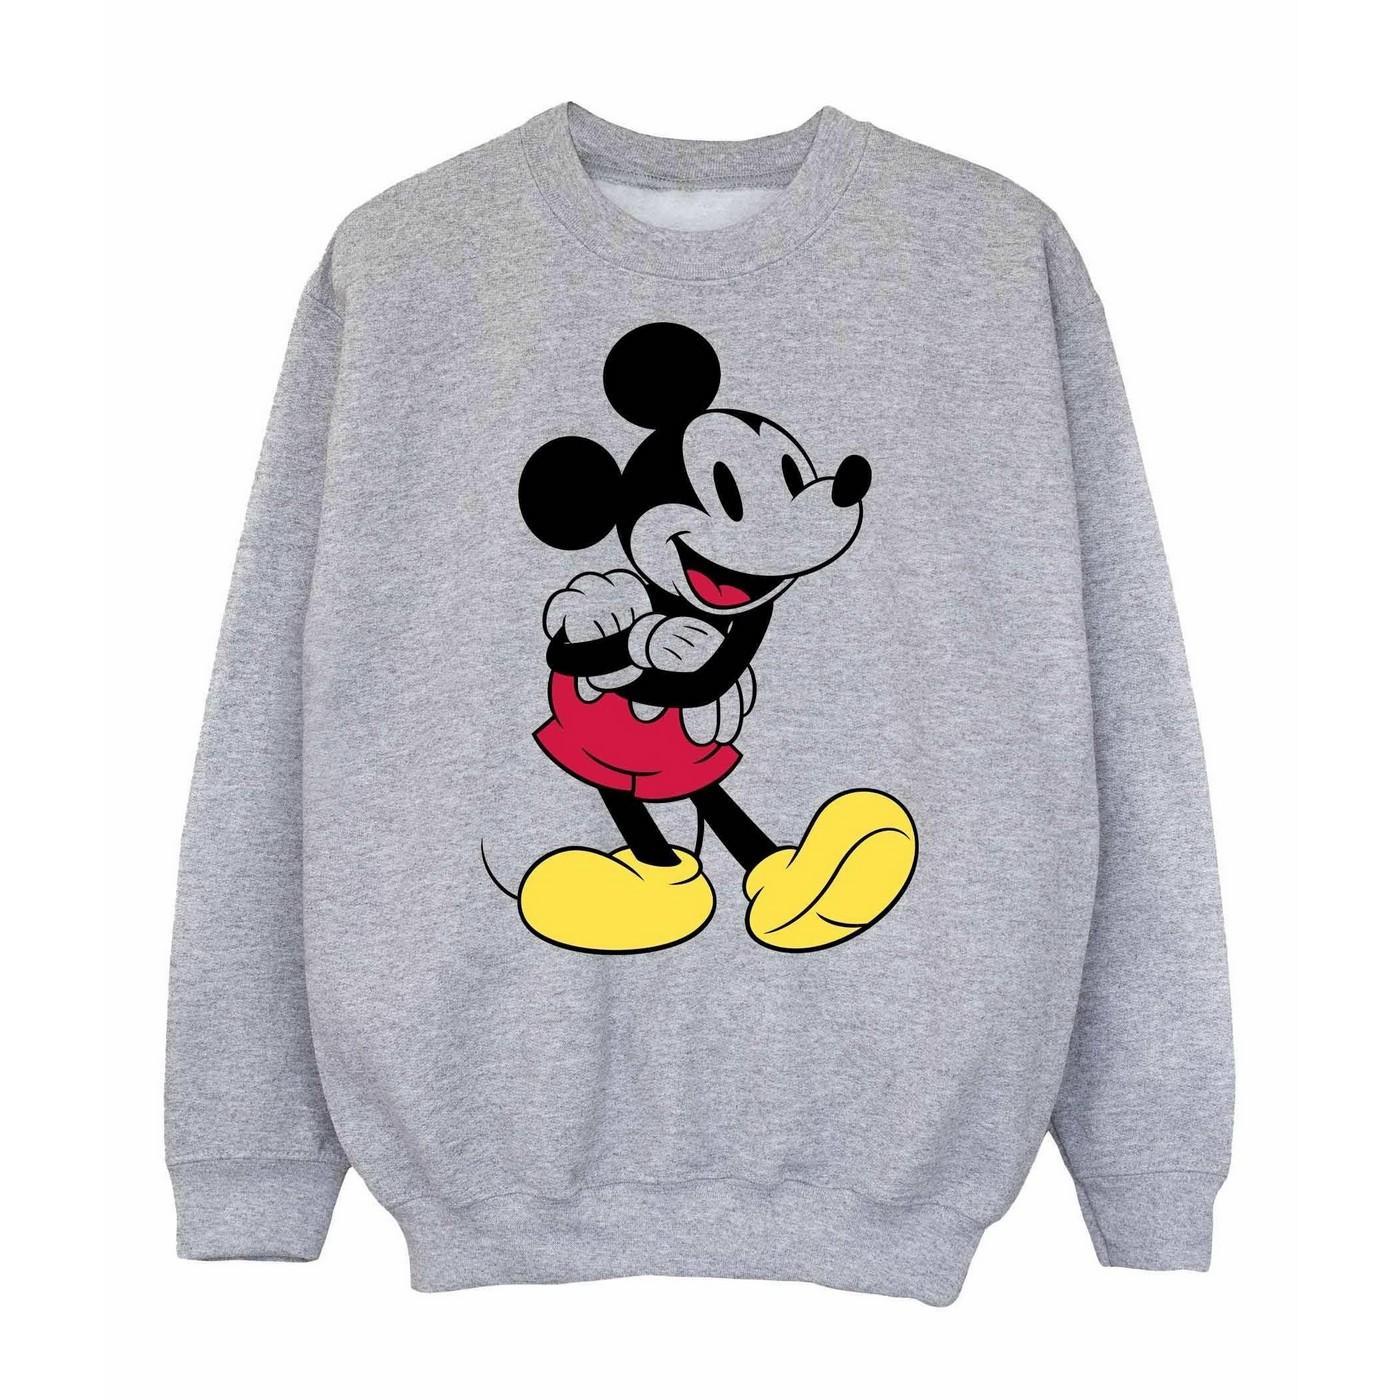 Disney Girls Classic Mickey Mouse Sweatshirt (Sports Grey) (9-11 Years)